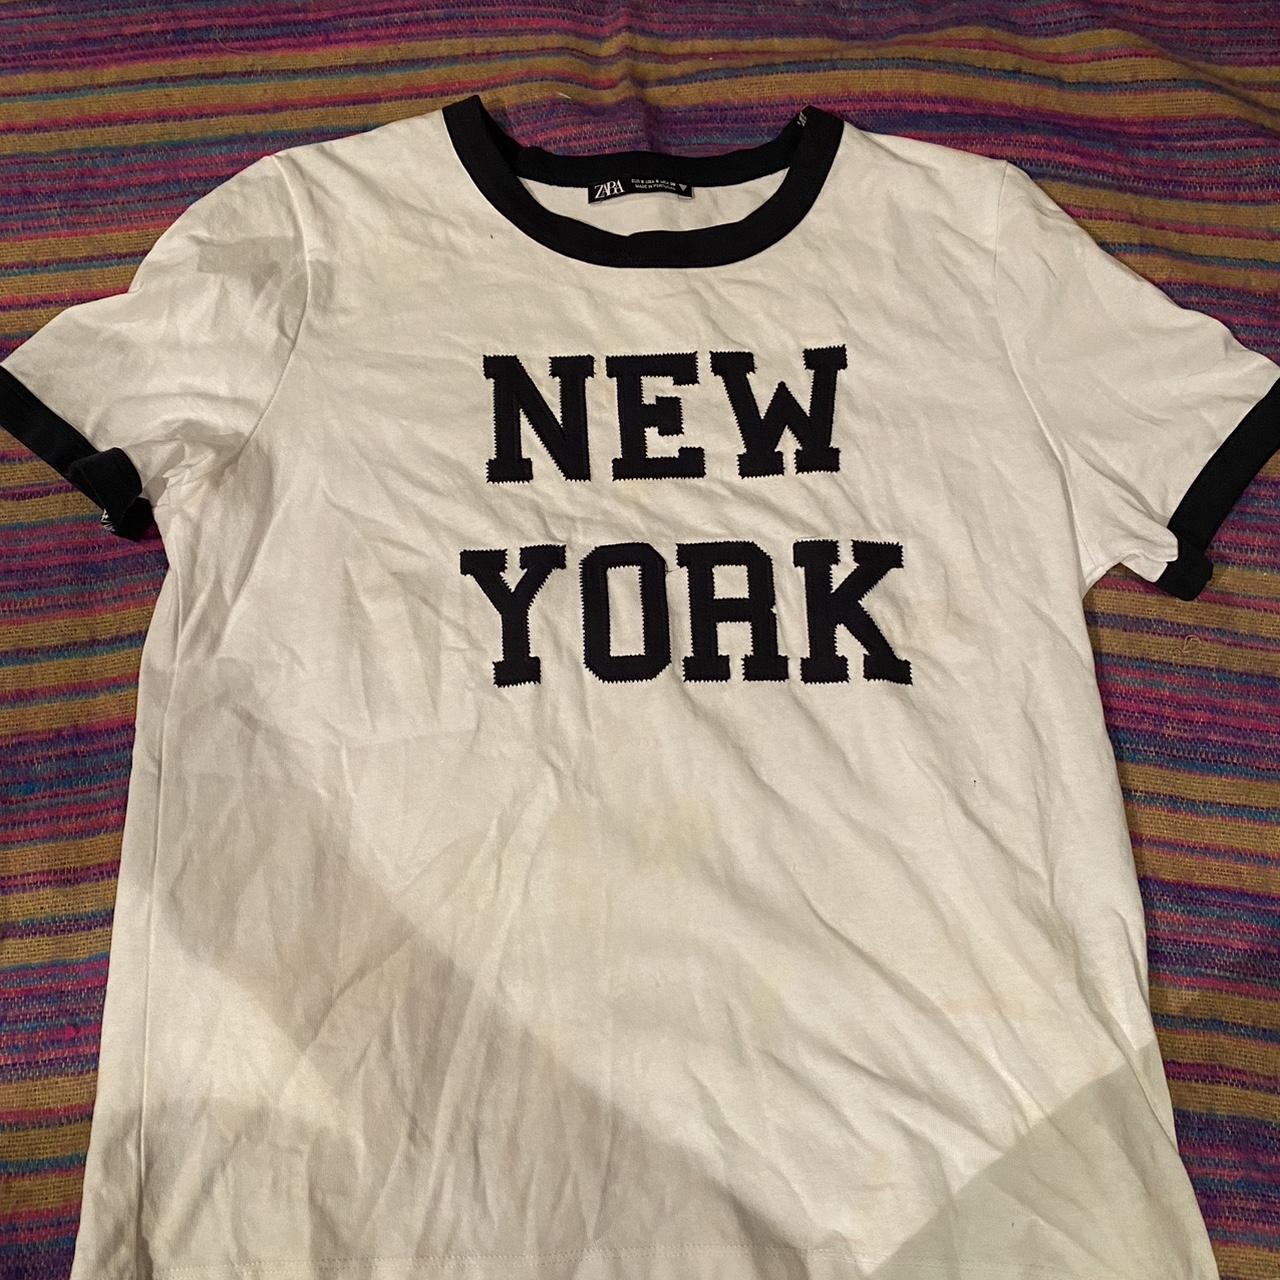 White and navy blue “New York” t-shirt - Zarah - size s - Depop